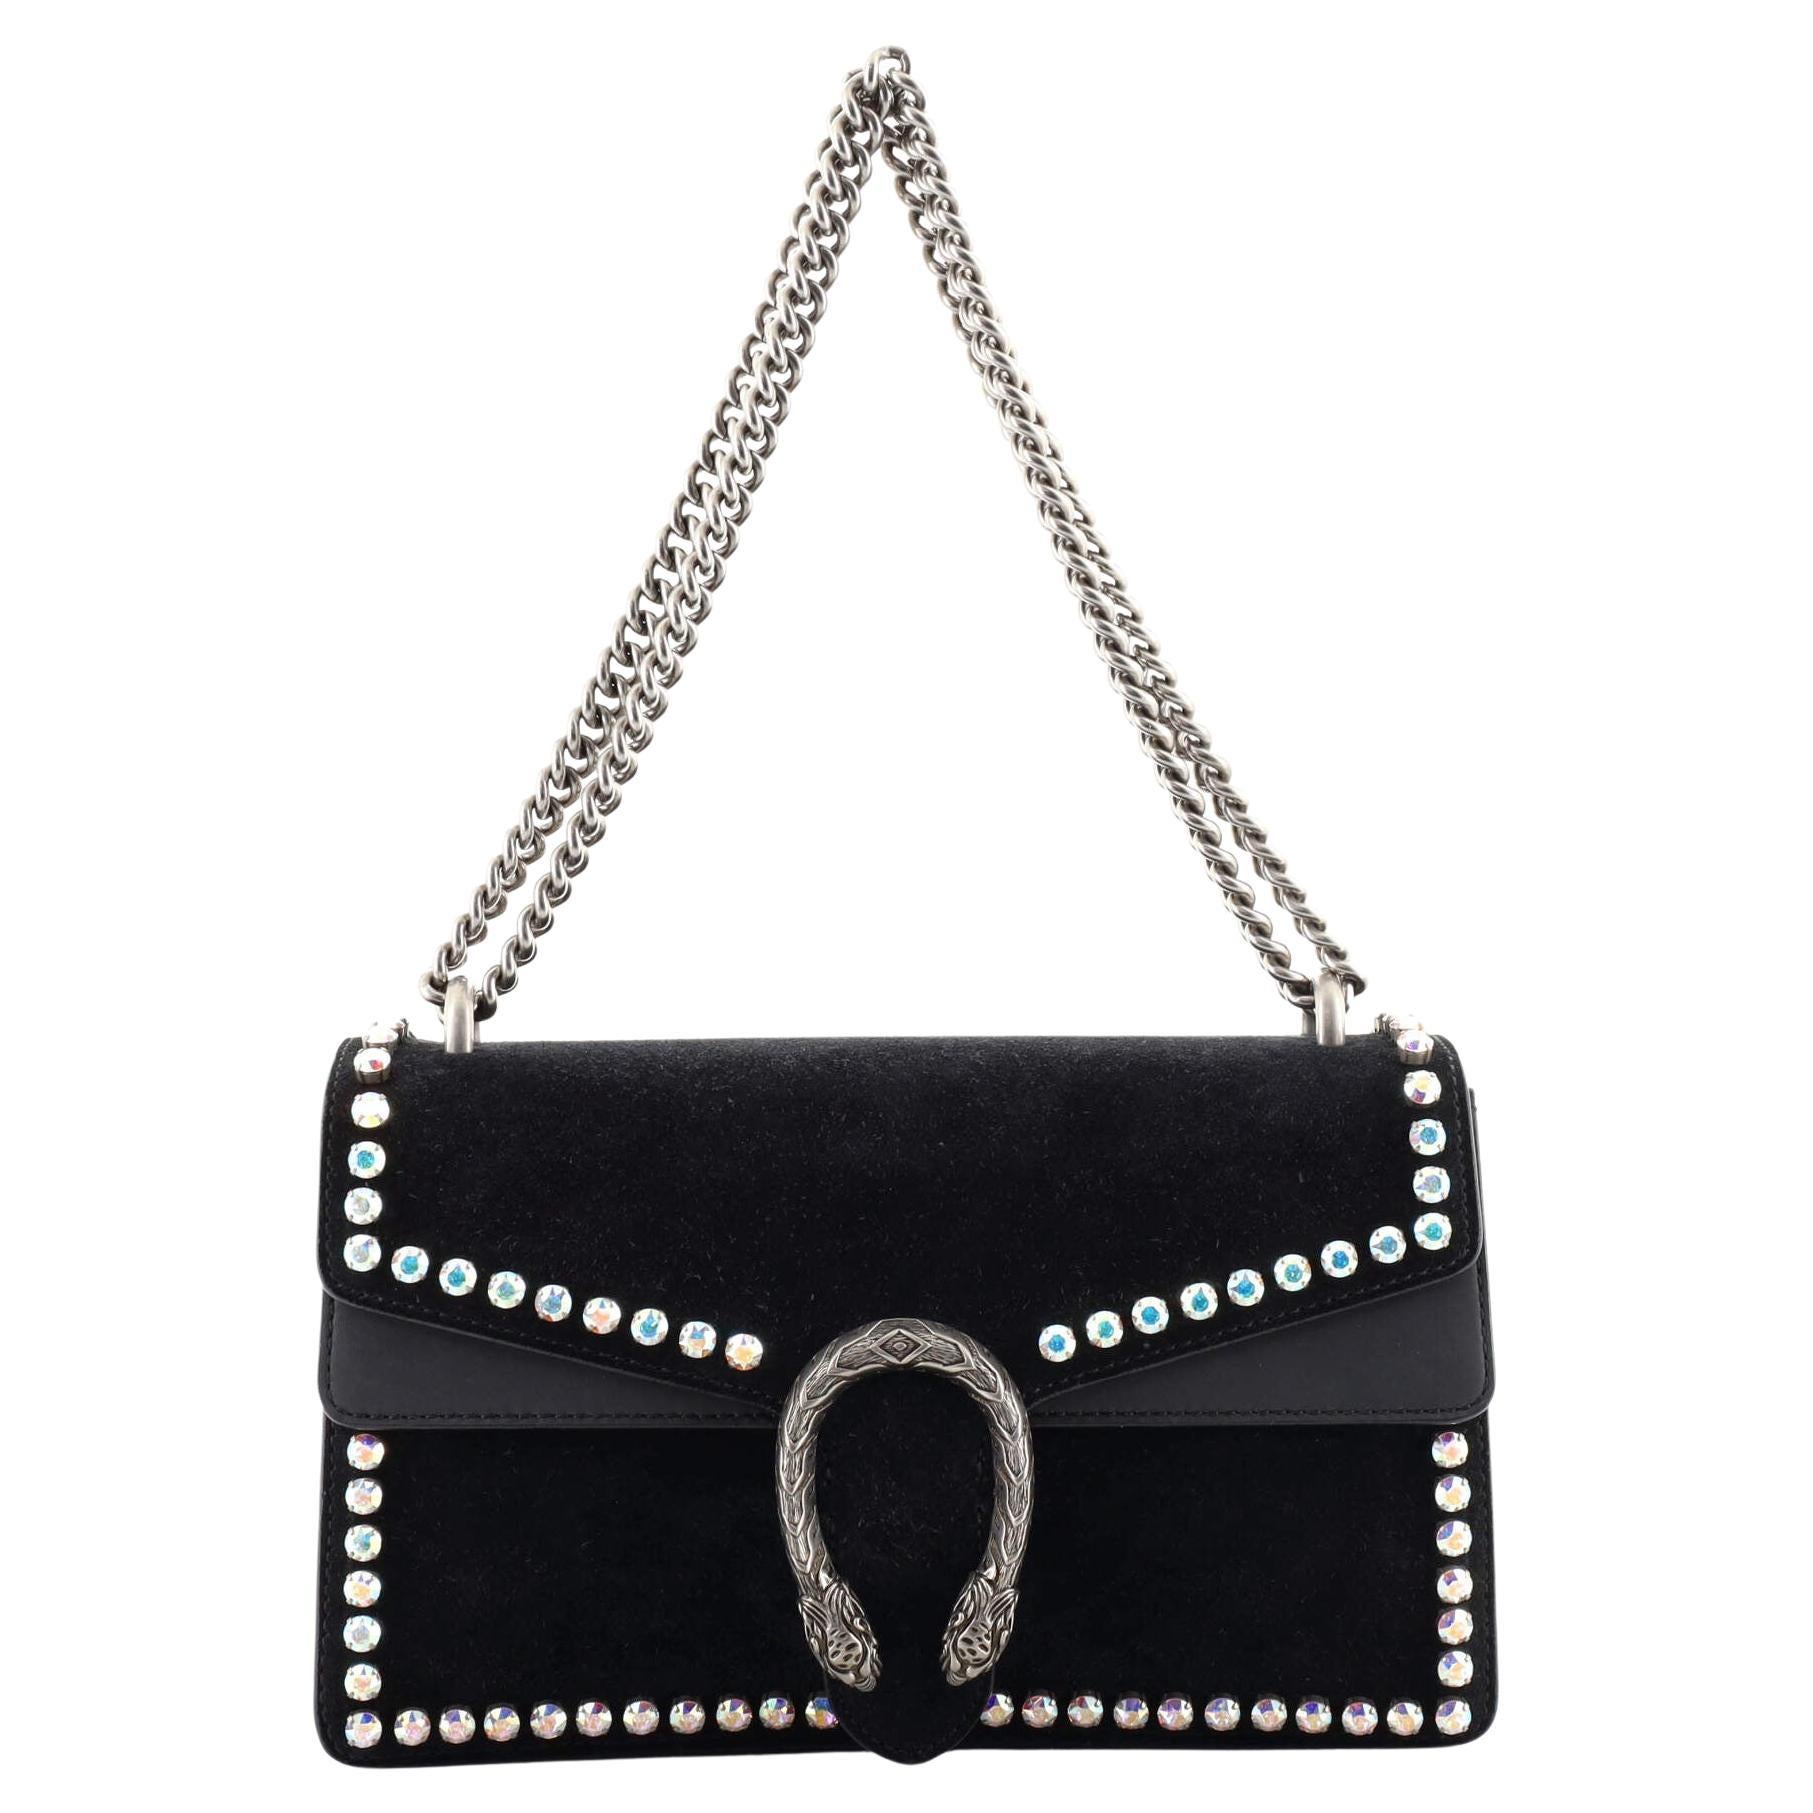 Gucci Dionysus Bag Crystal Embellished Suede Small